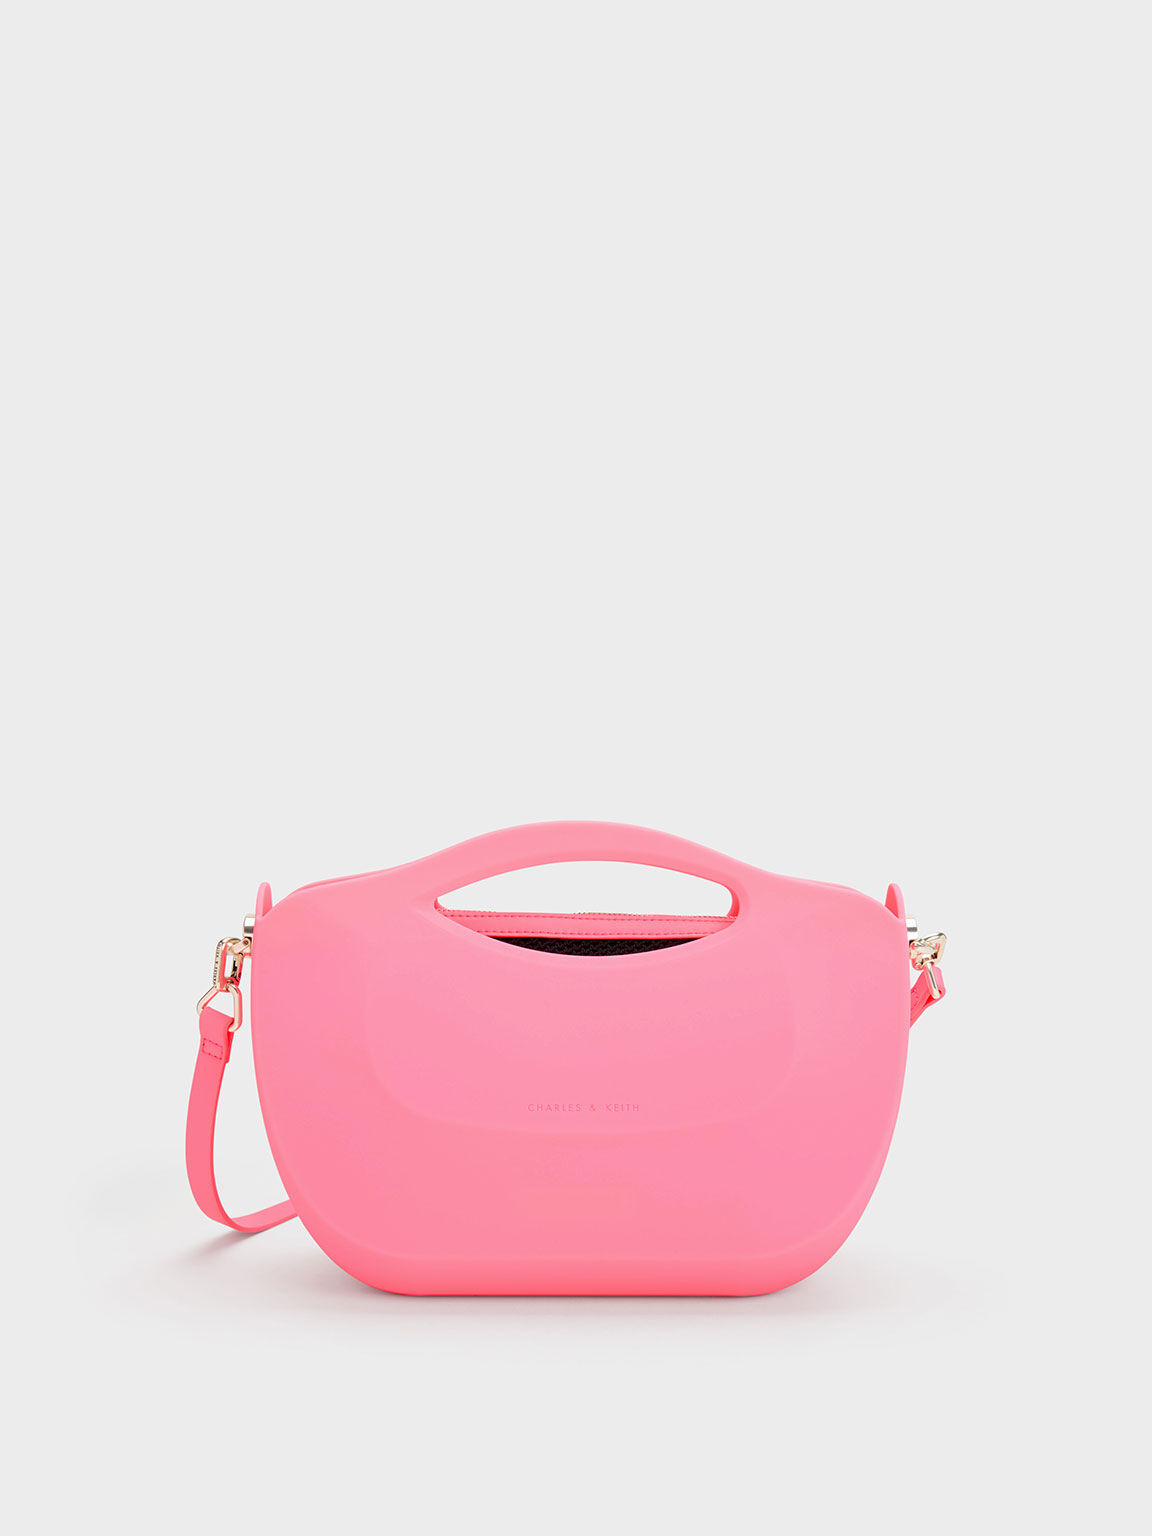 Cocoon 弧形手提包, 粉紅色, hi-res